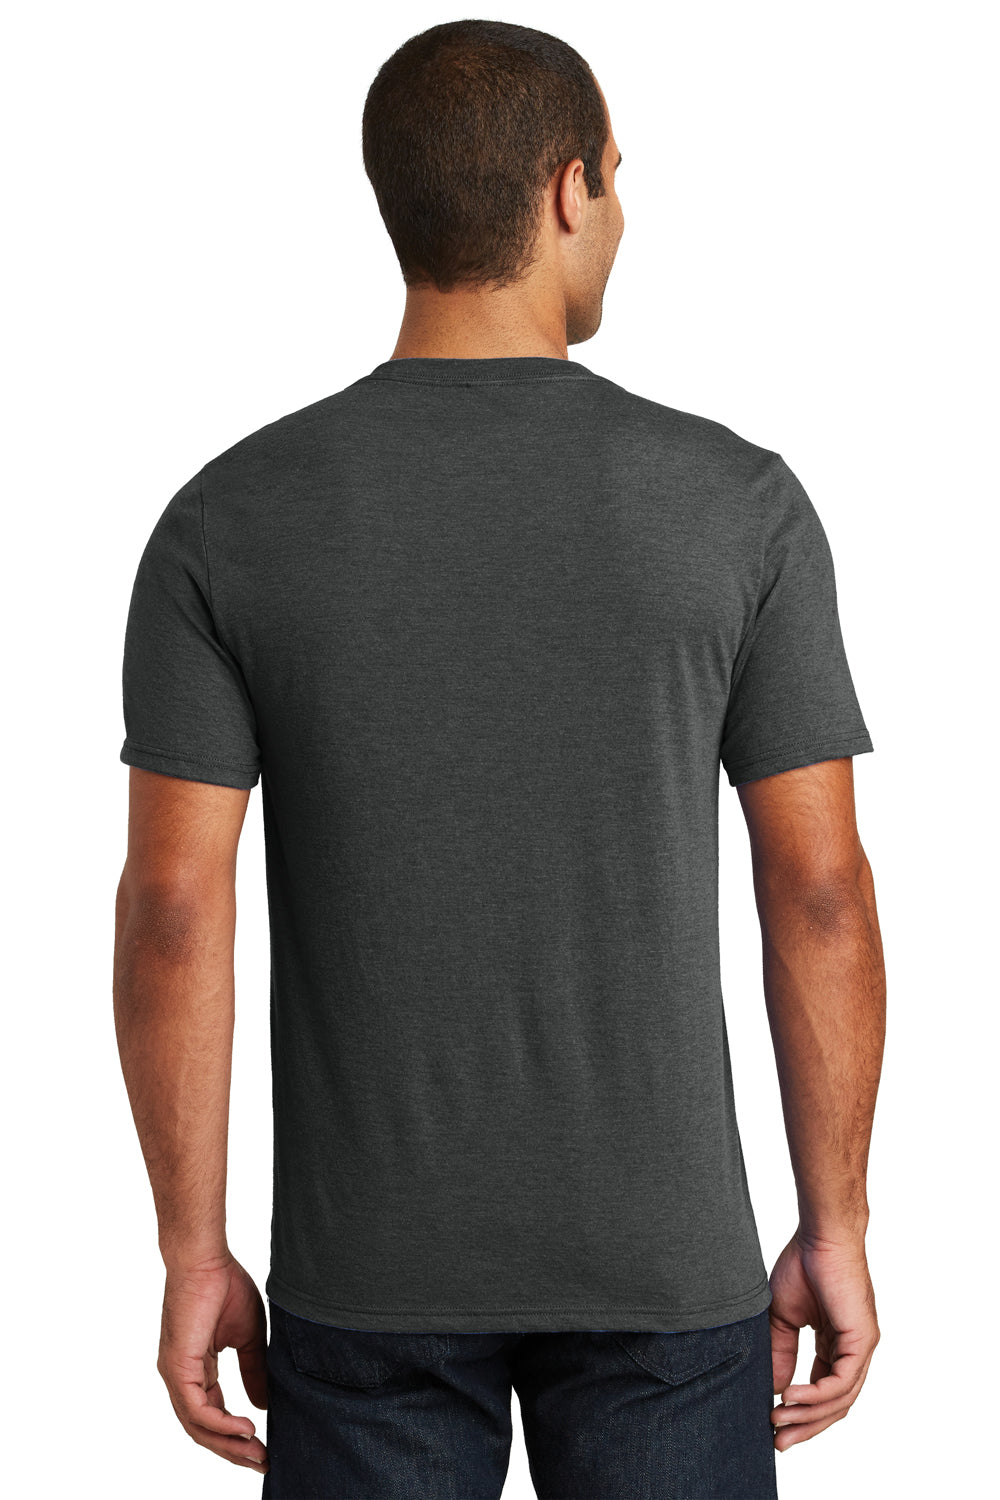 District DT1350 Mens Perfect Tri Short Sleeve V-Neck T-Shirt Black Frost Back